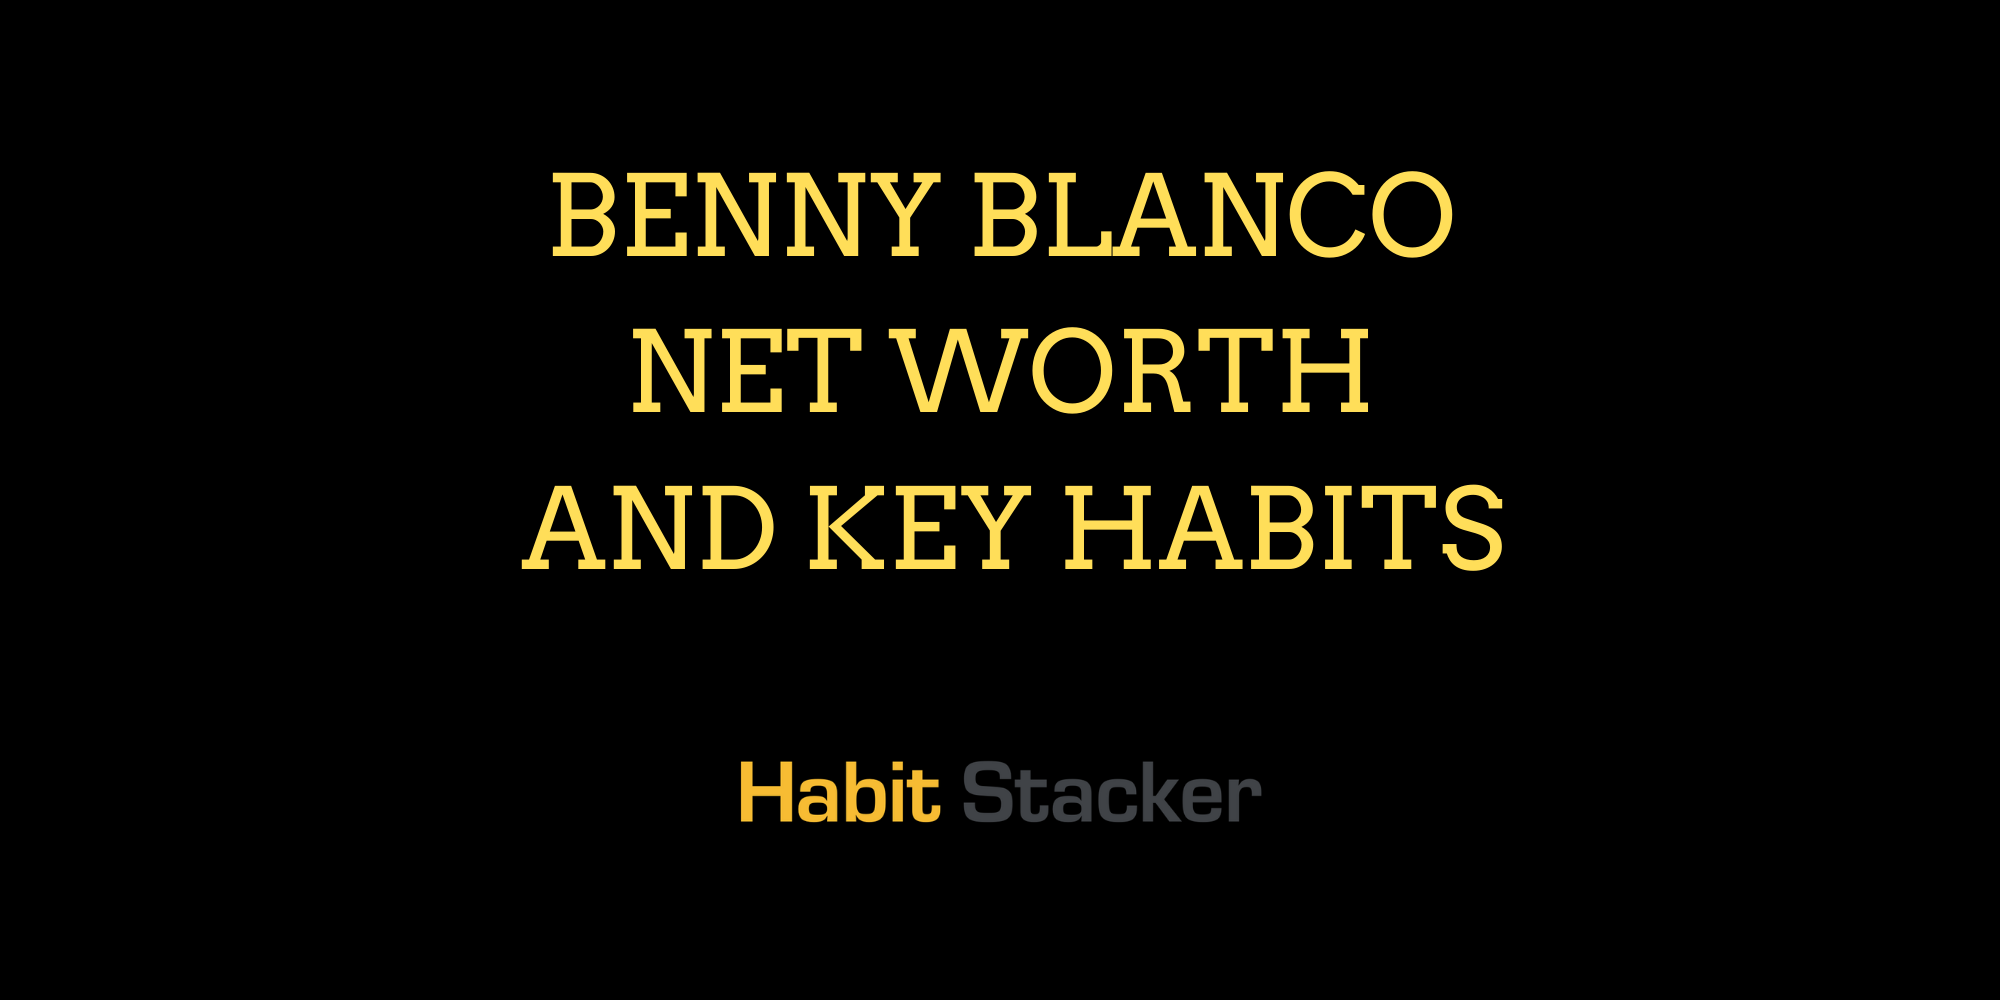 Benny Blanco Net Worth and Key Habits